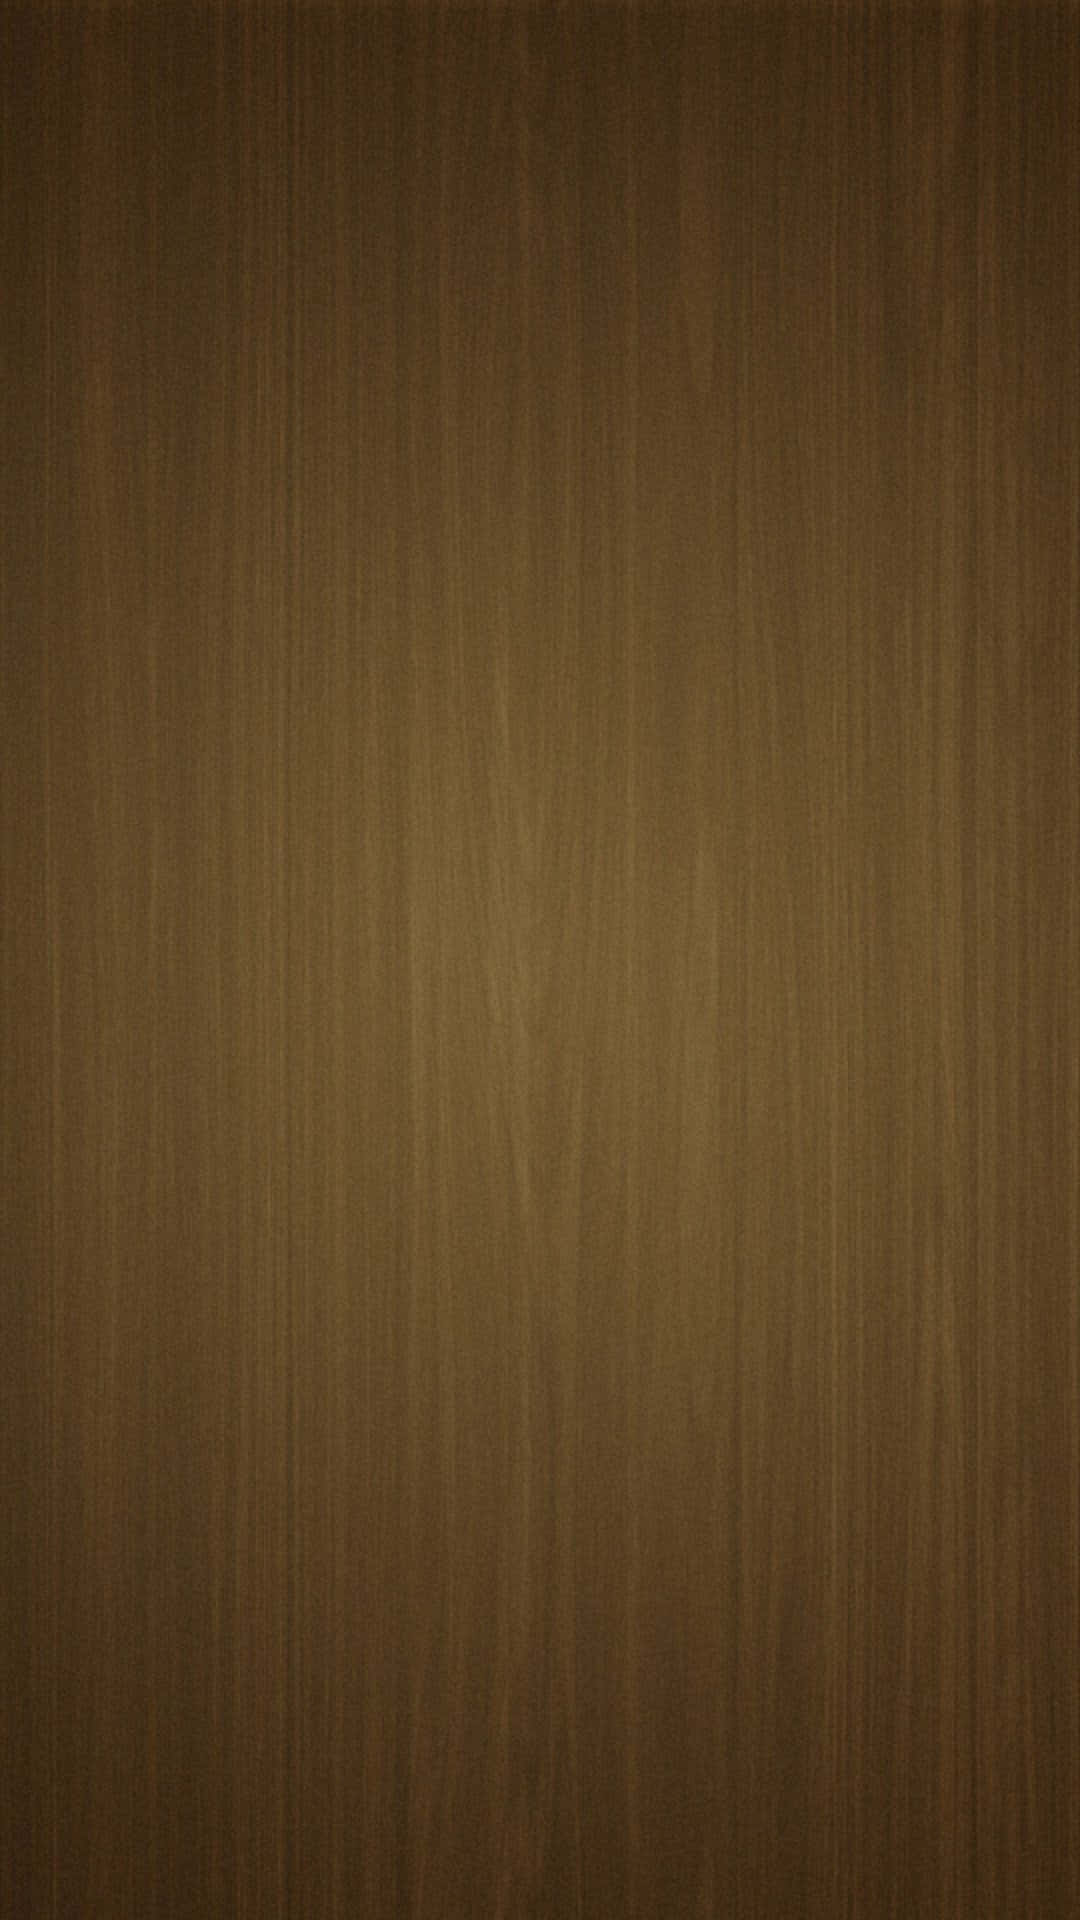 A modern classic - The Dark Brown Iphone Wallpaper